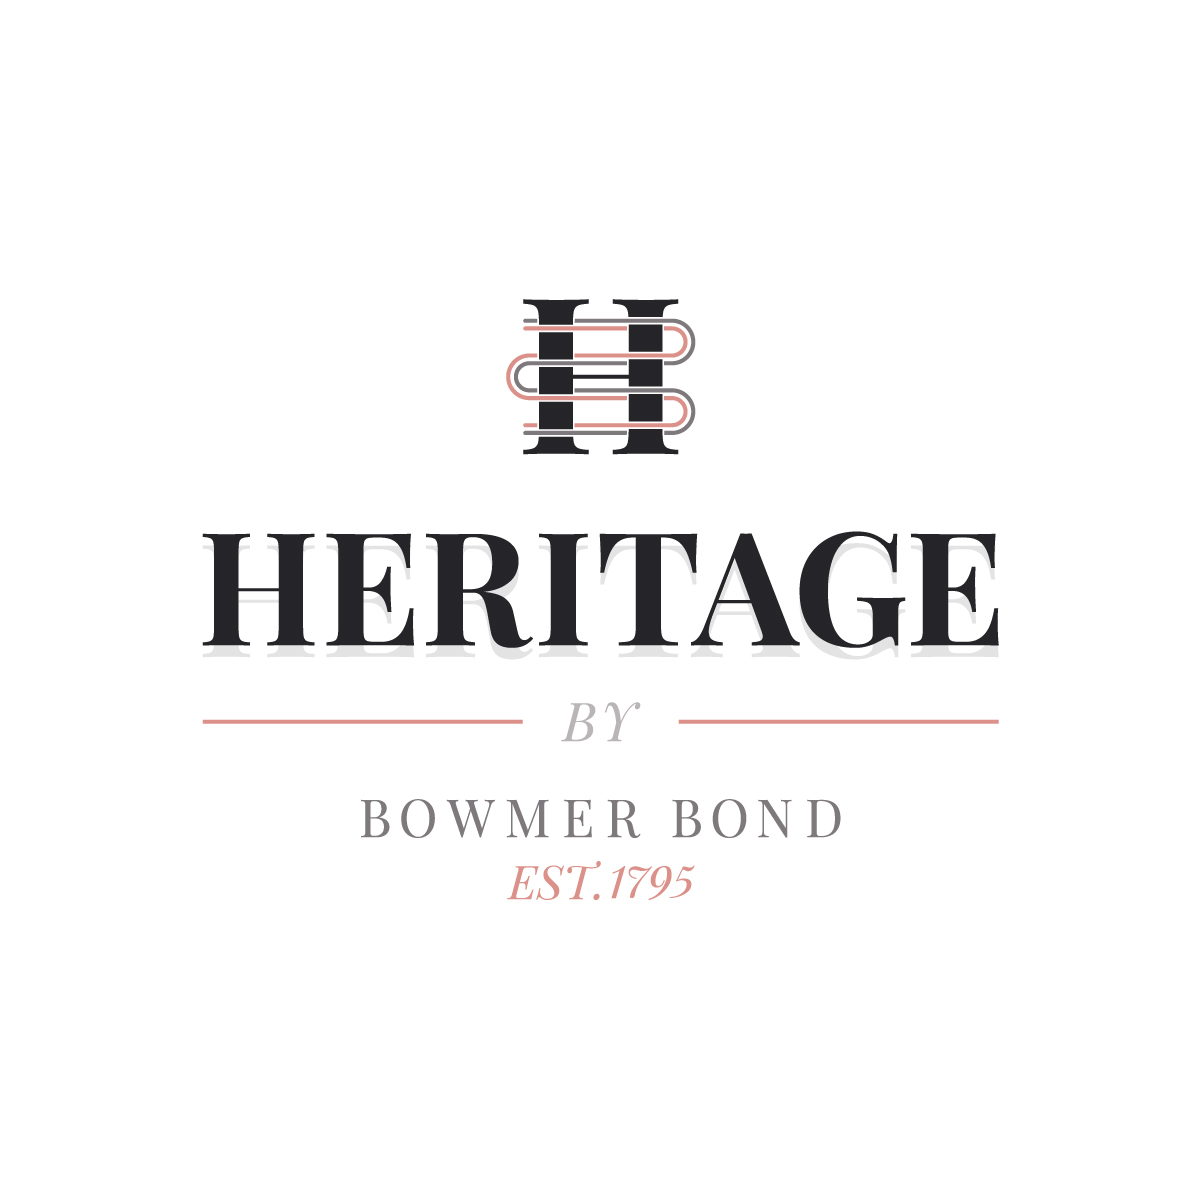 Heritage by Bowmer Bond logo